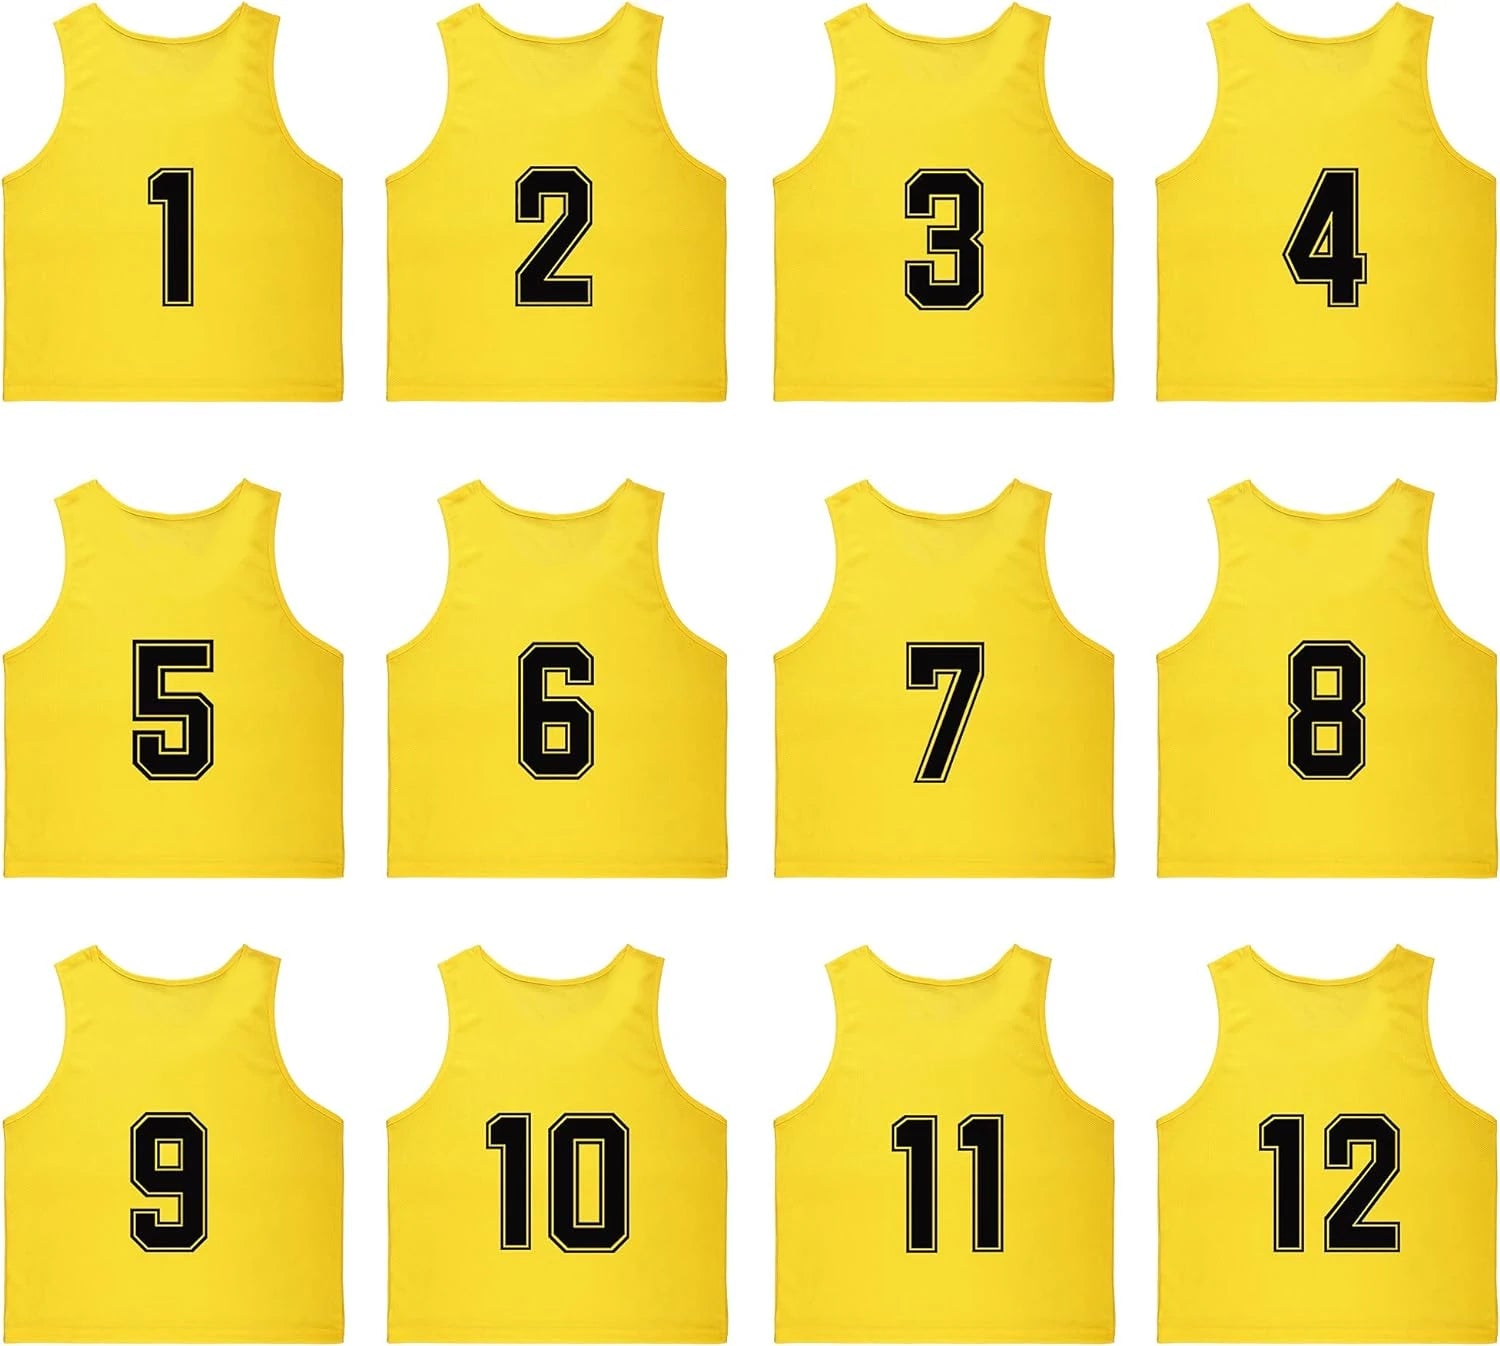 Buy yellow Team Practice Scrimmage Vests Sport Pinnies Training Bibs Numbered (1-12)